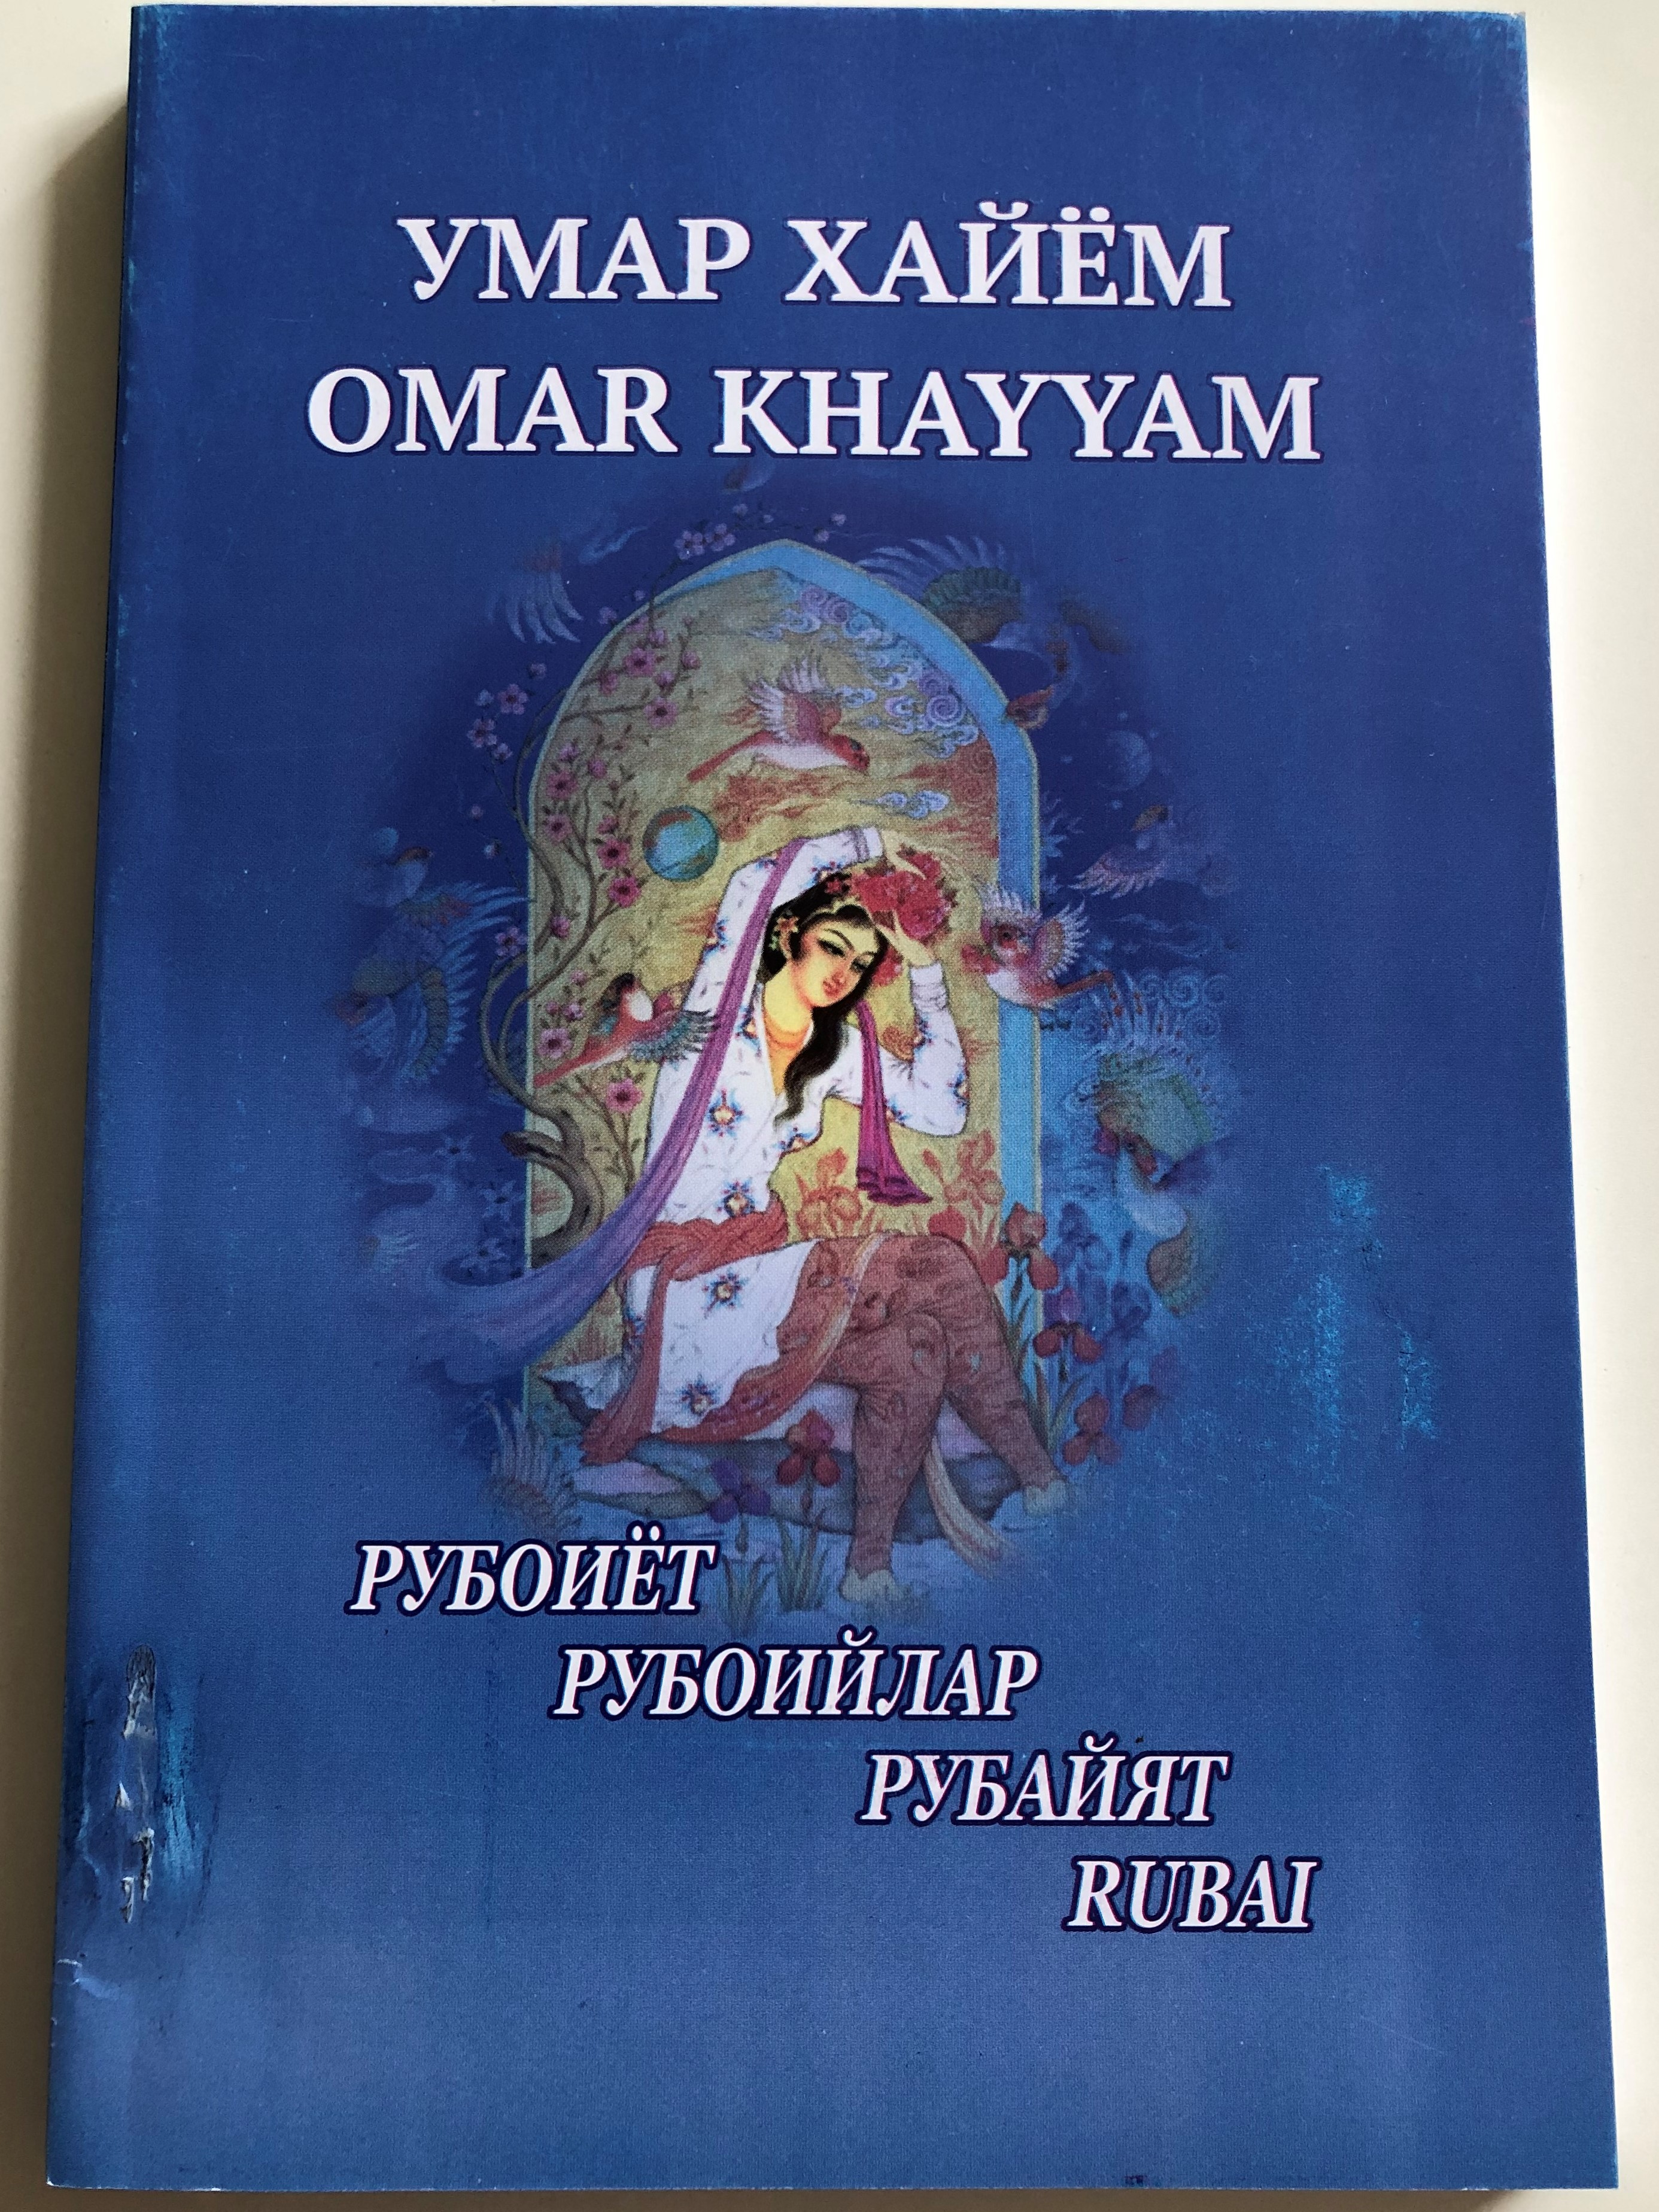 -rubai-by-omar-khayyam-tajik-uzbek-russian-and-english-language-christian-poetry-book-turon-zamin-ziyo-2017-1-.jpg